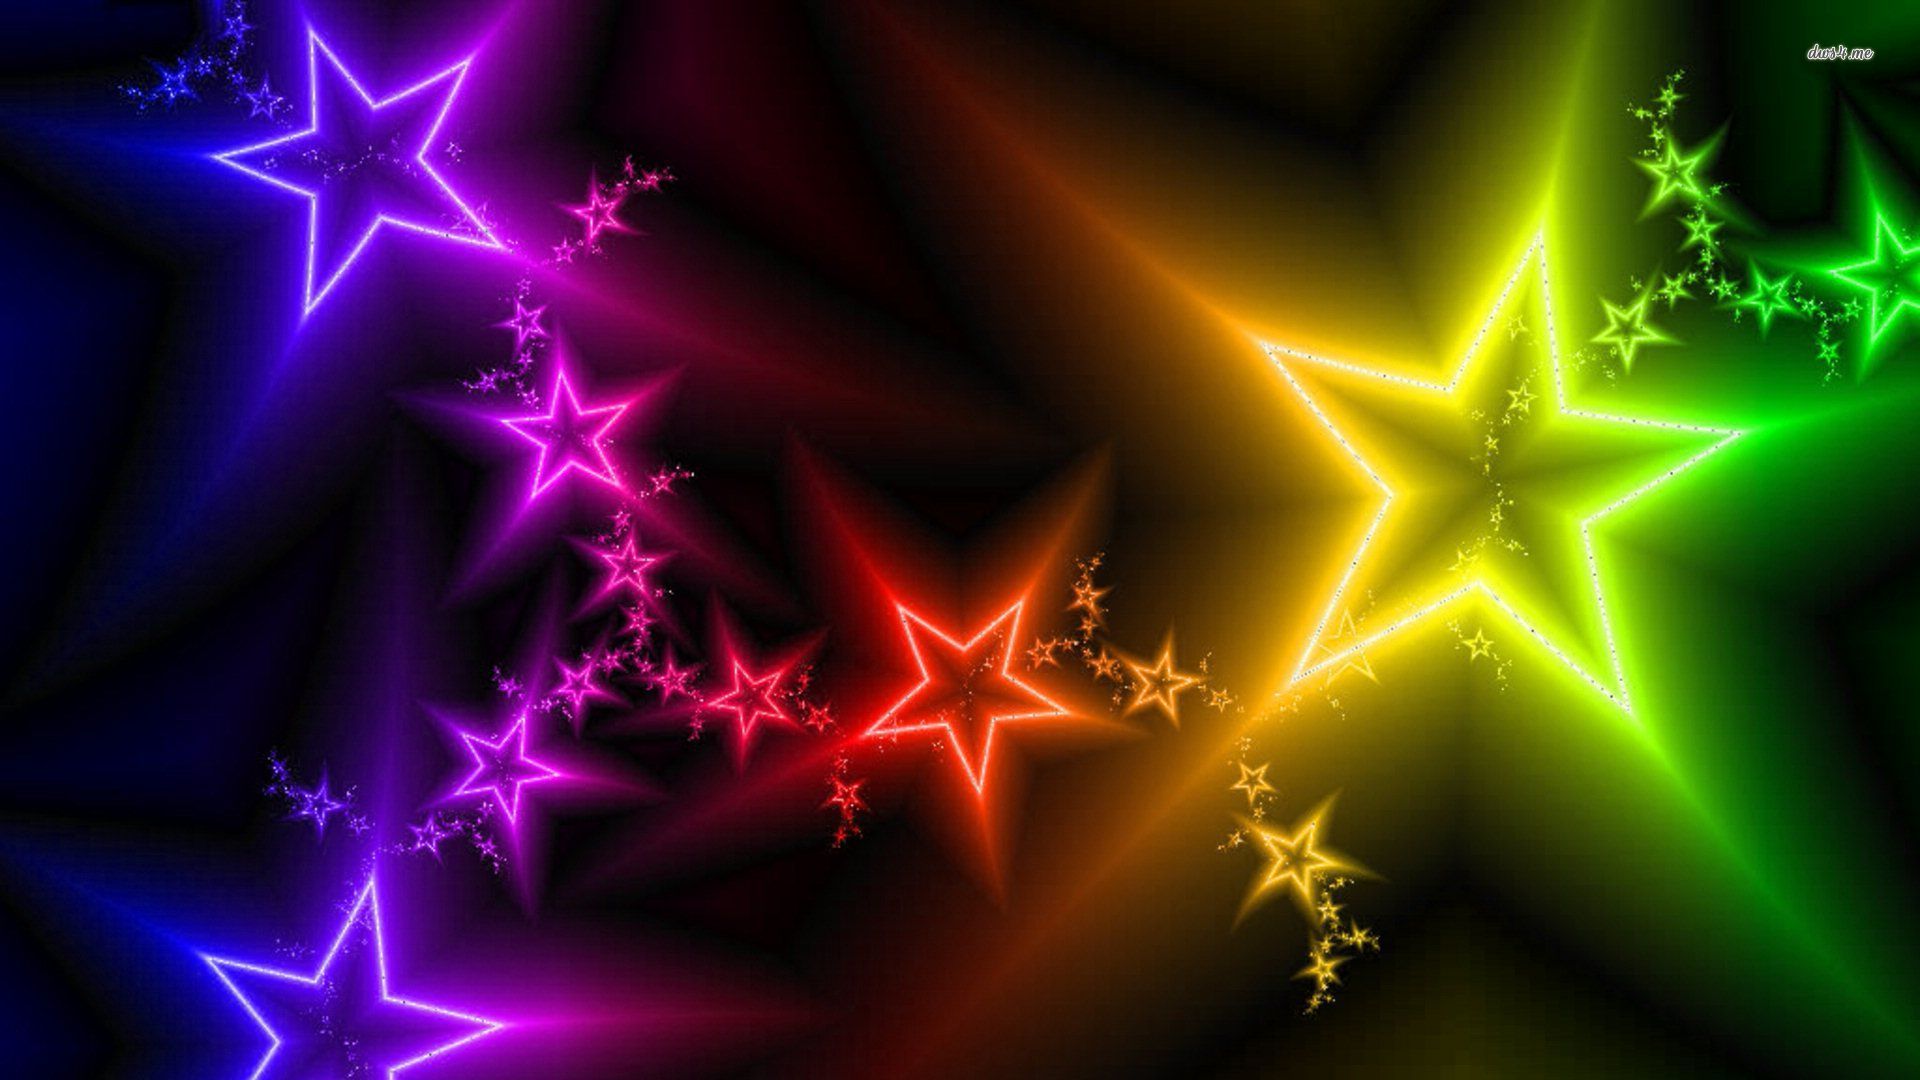 Colorful Stars Wallpaper